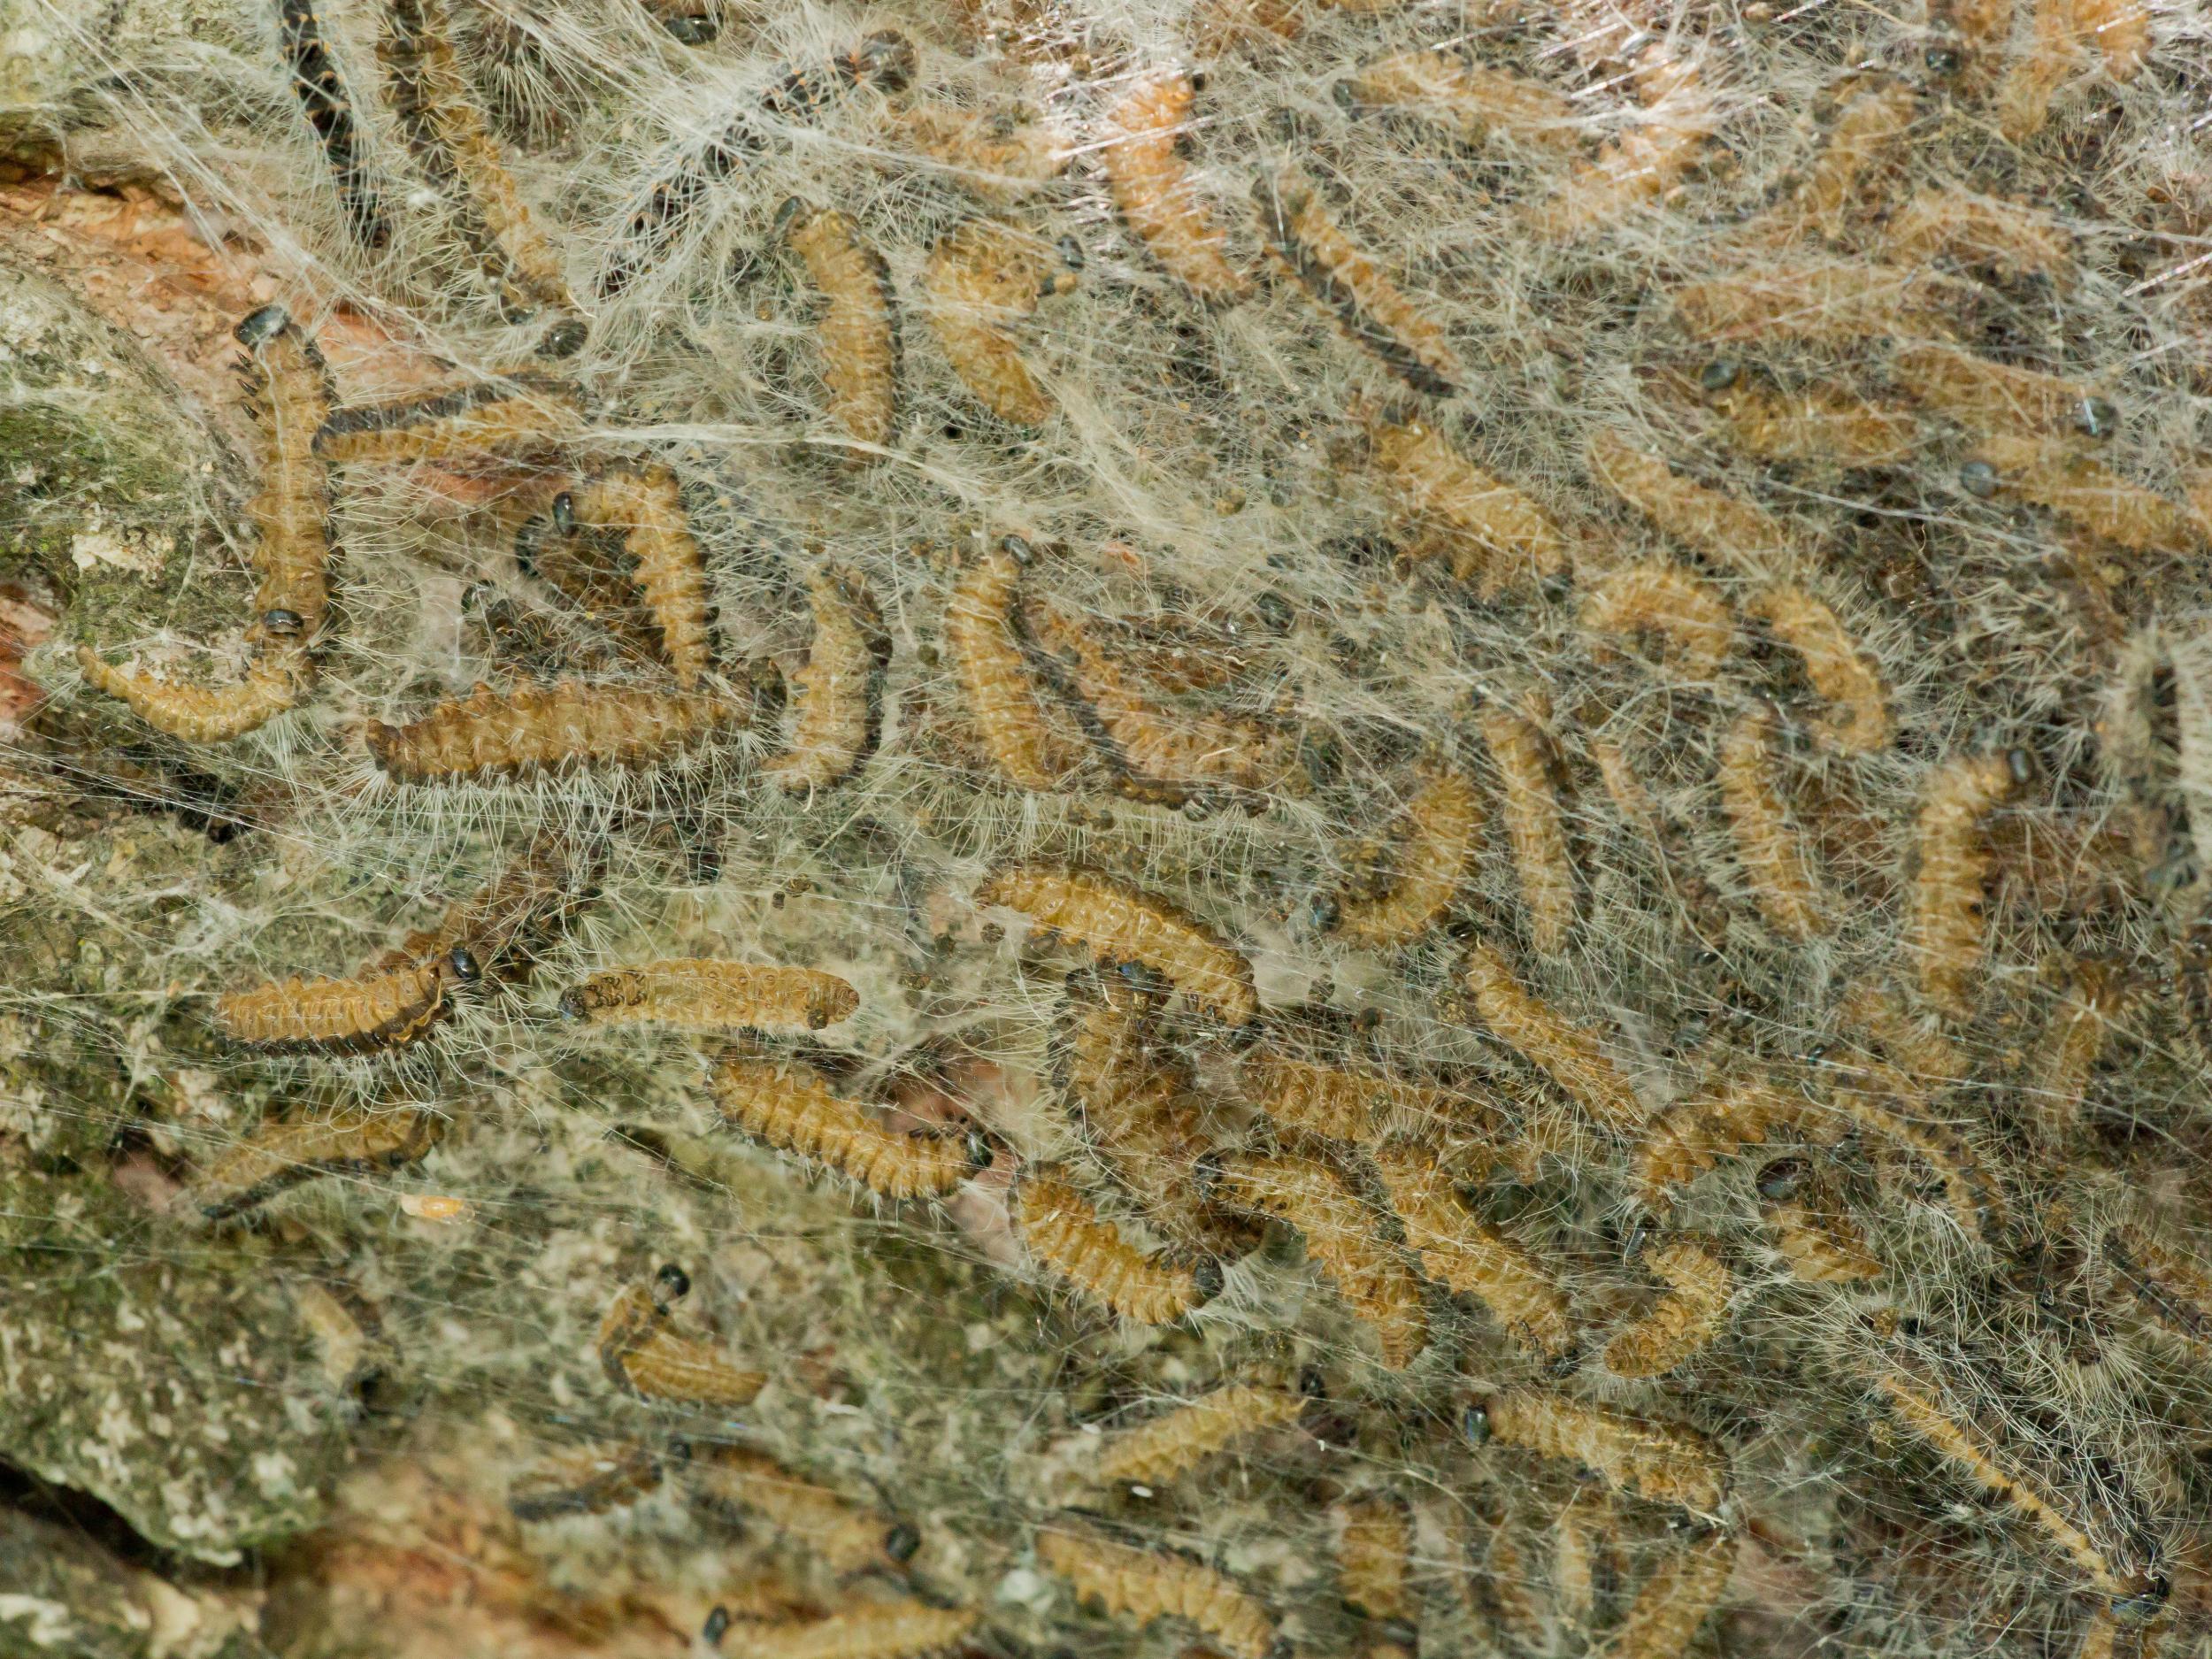 Caterpillar nest of Oak Processionary moth